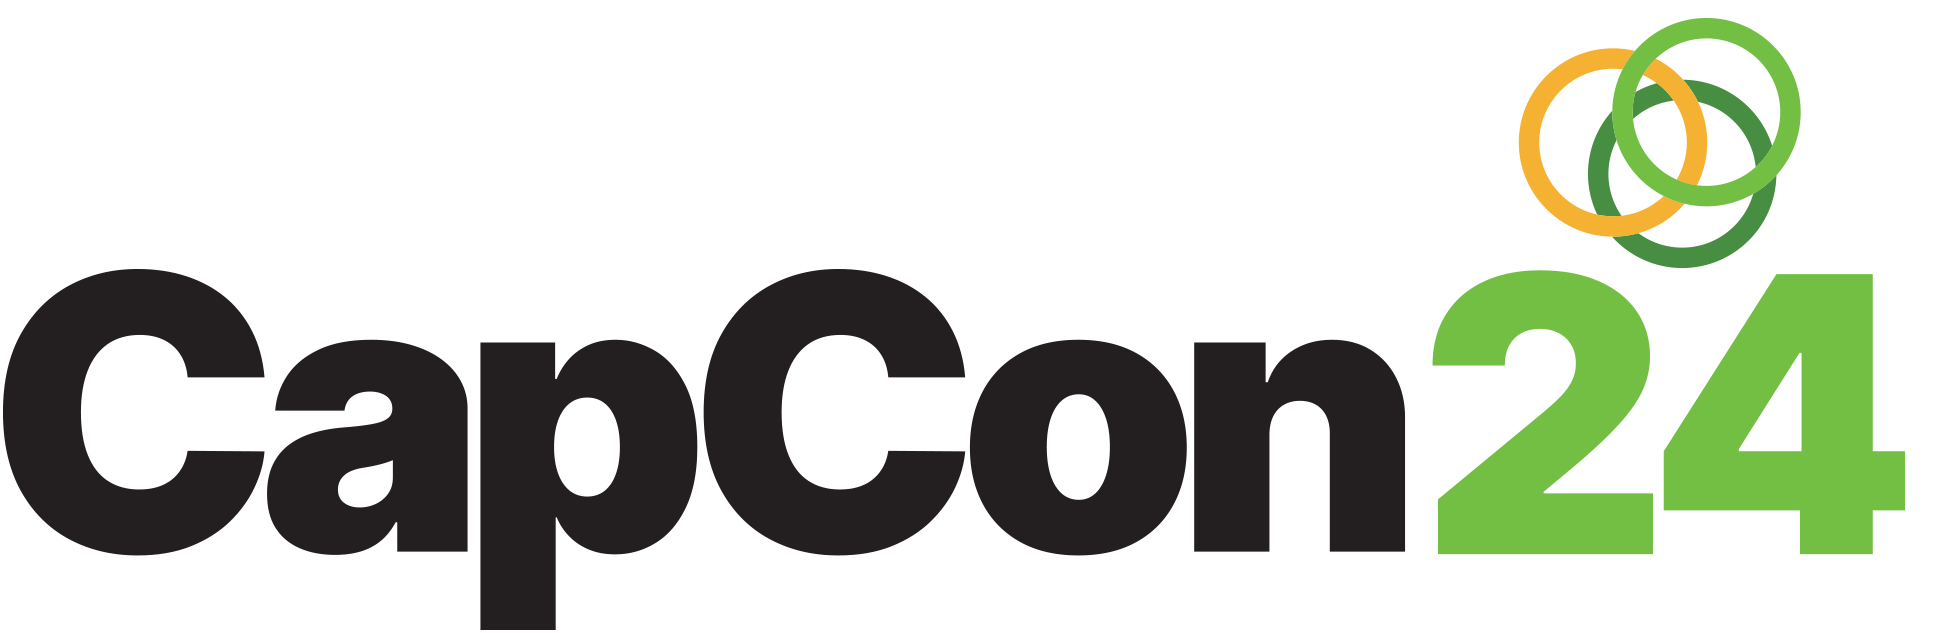 CapCon24 Web Logo Black@3x